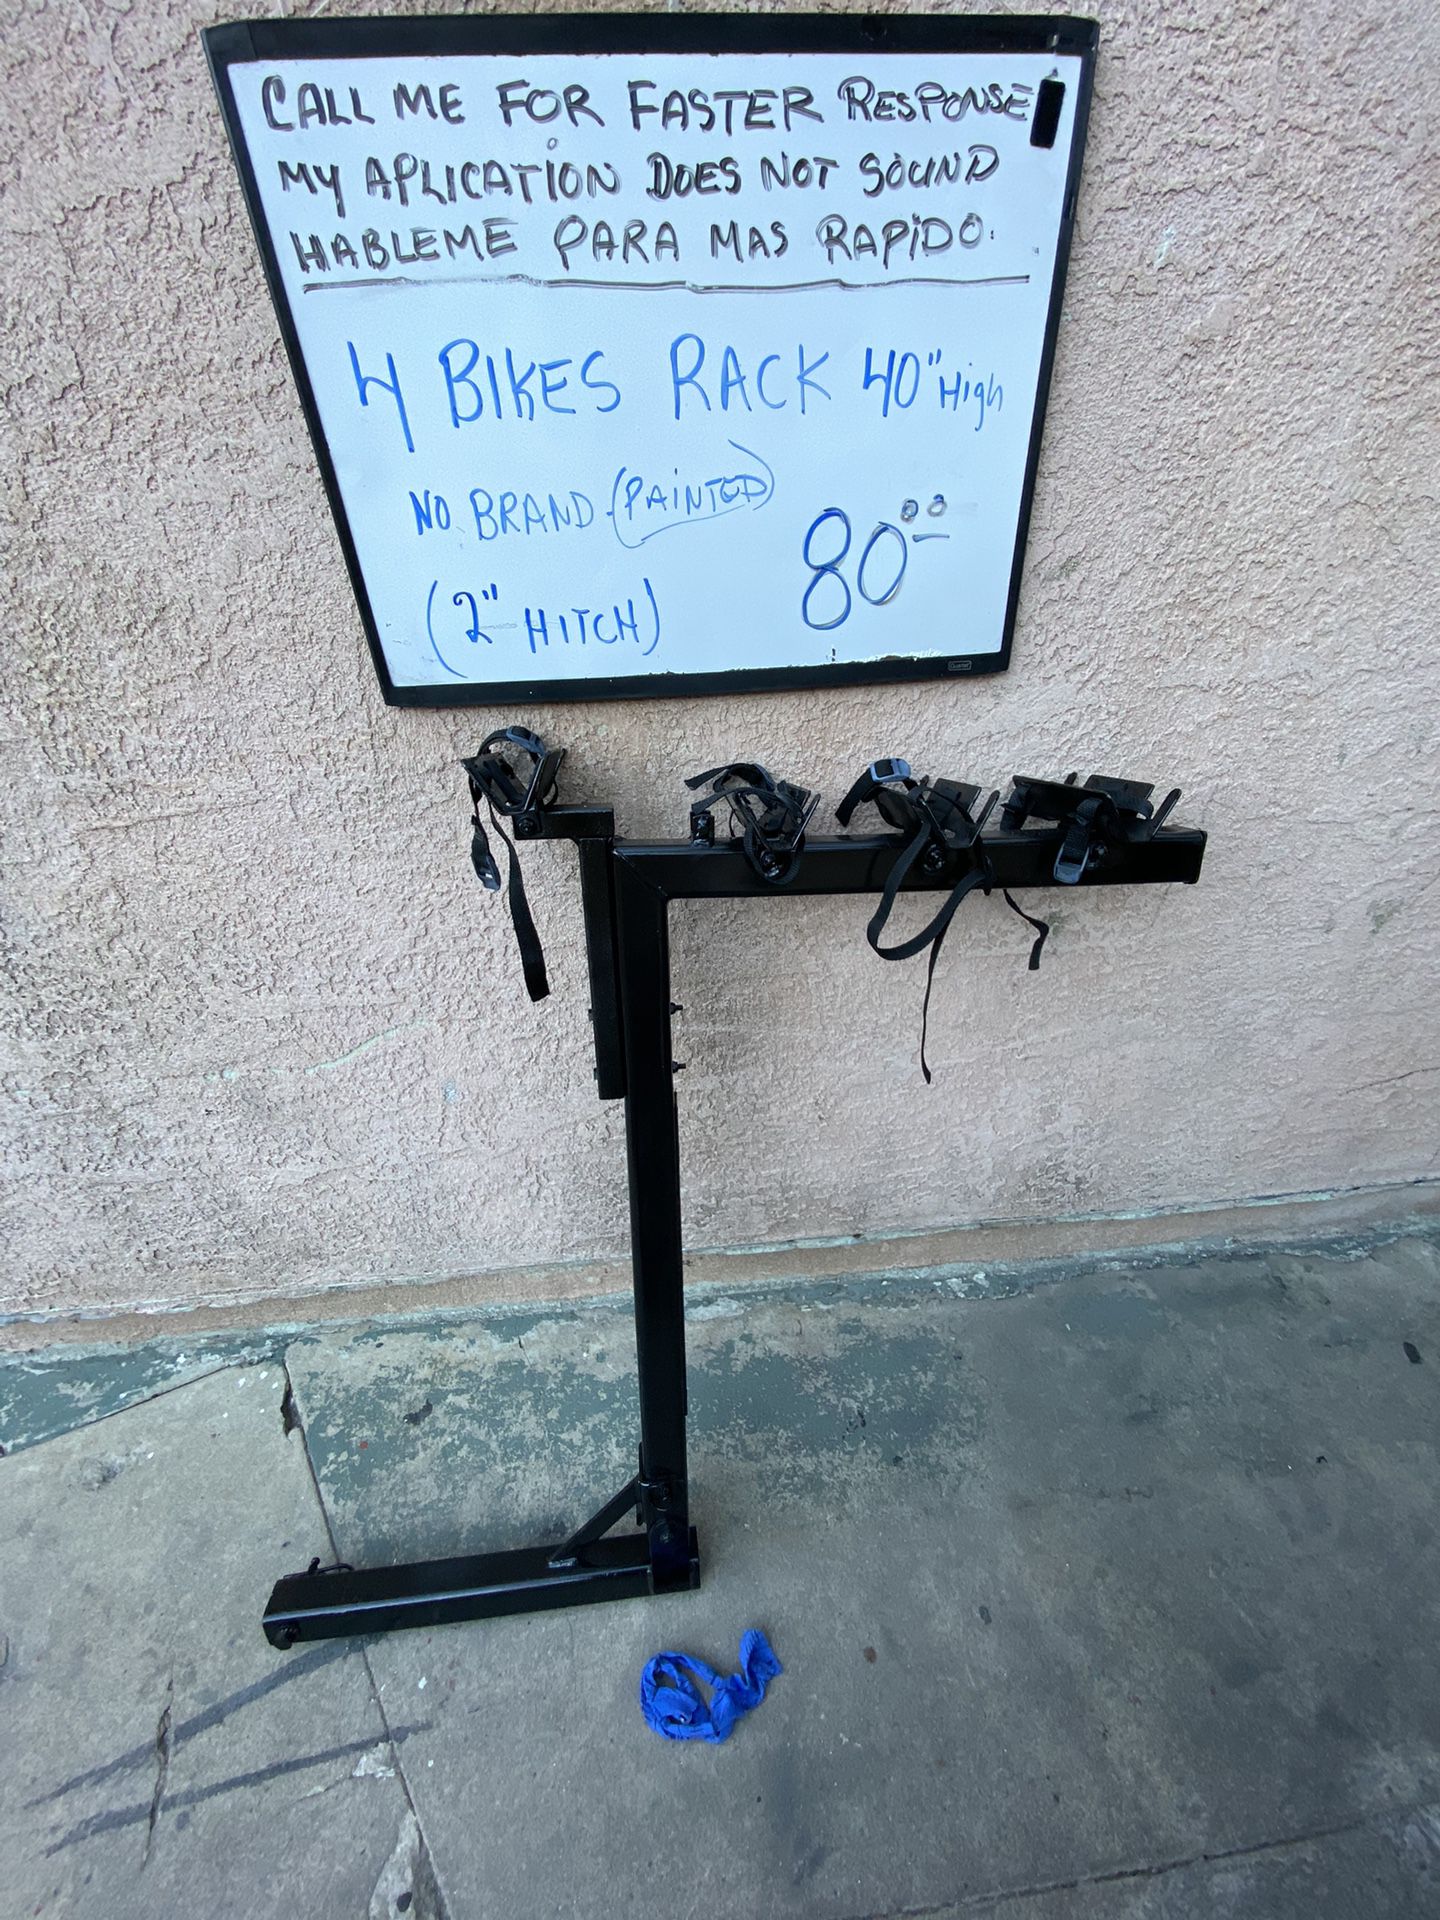 4 Bikes Rack